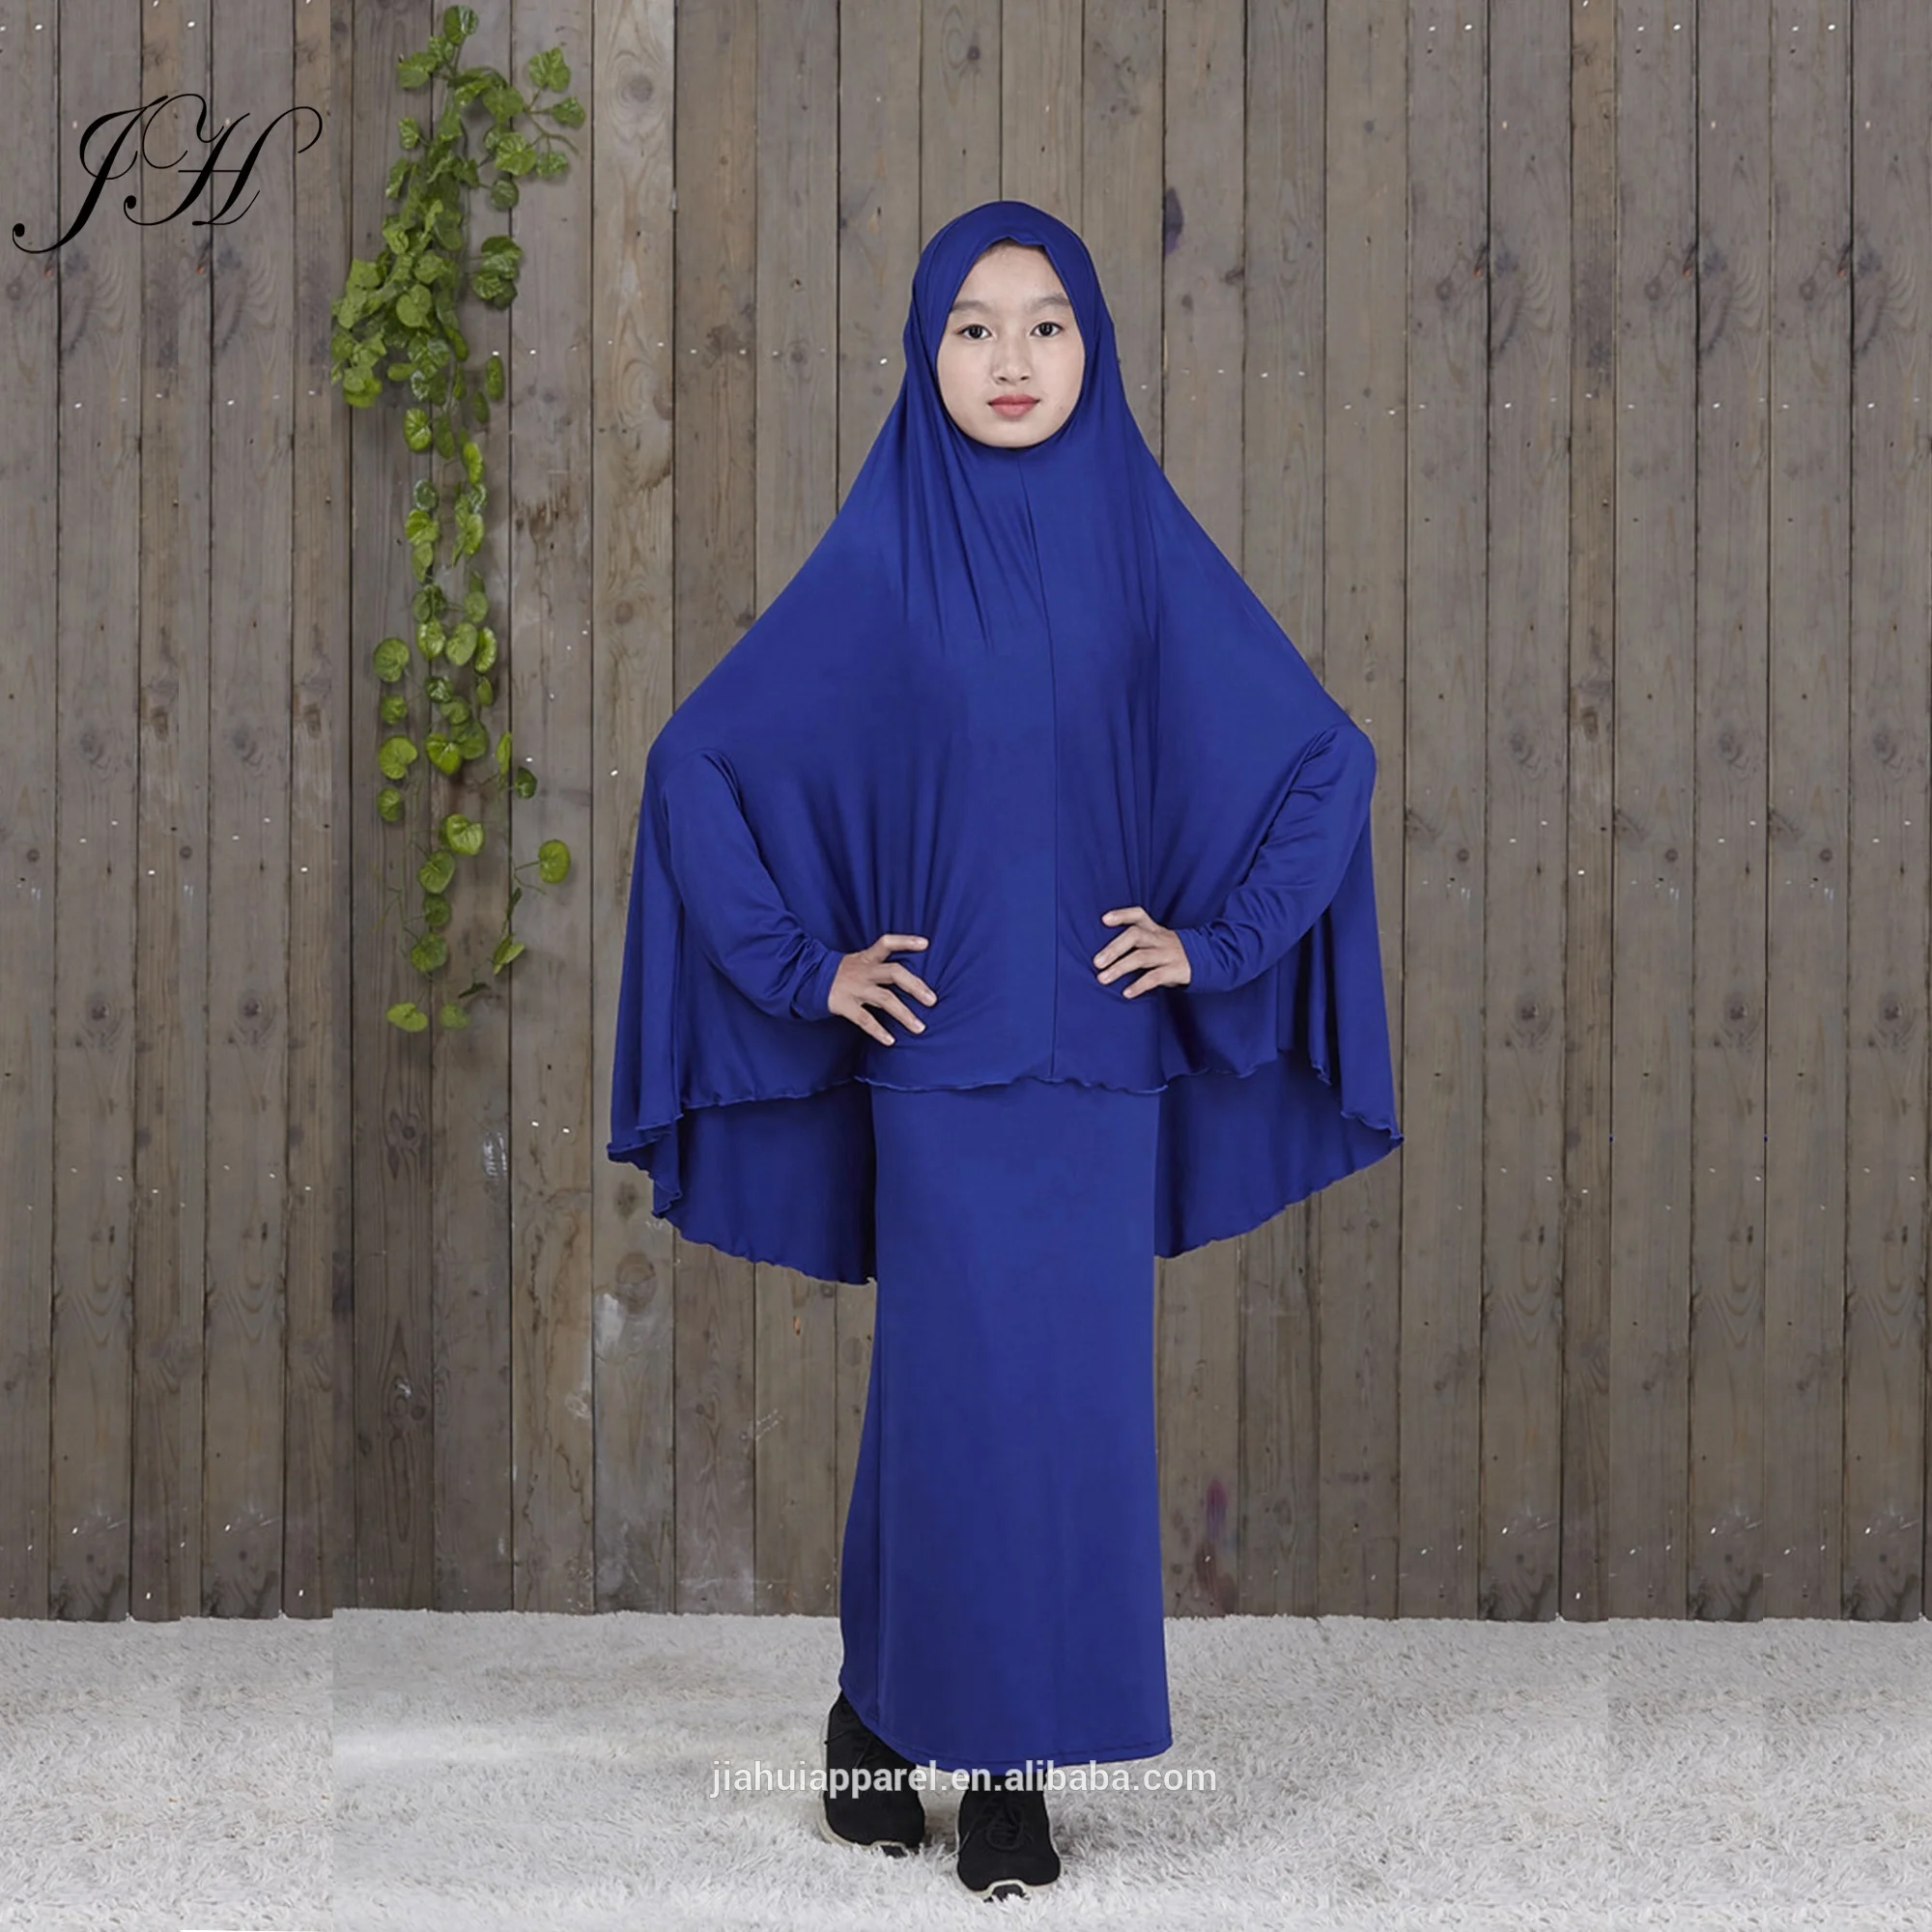 

Wholesale Solid Color Muslim Kids Overhead Jilbab Two Piece Hijab Abaya Khimar Headscarf Prayer dress, 11 colors